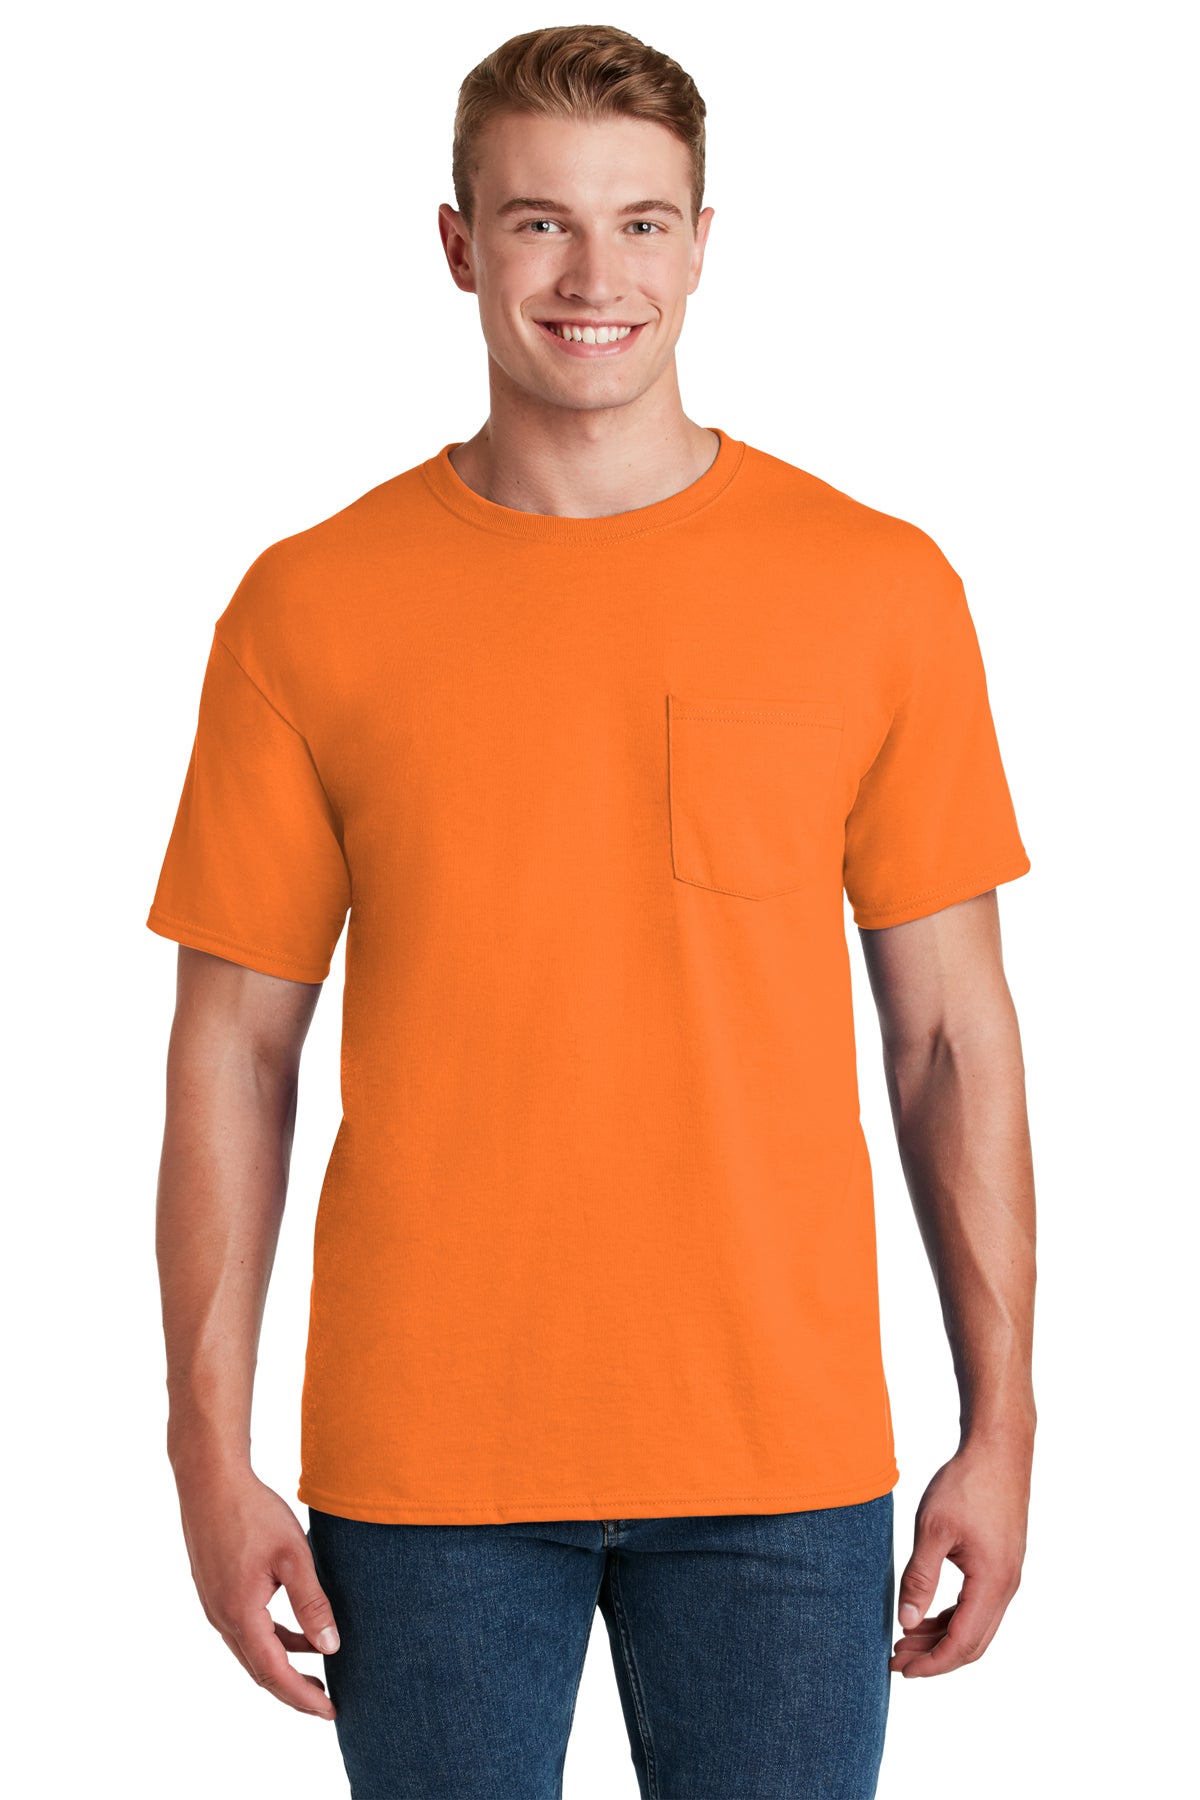 50/50 Cotton/Poly JERZEES® - – Dri-Power® Emblem 29MP Fann T-Shirt. Pocket USA